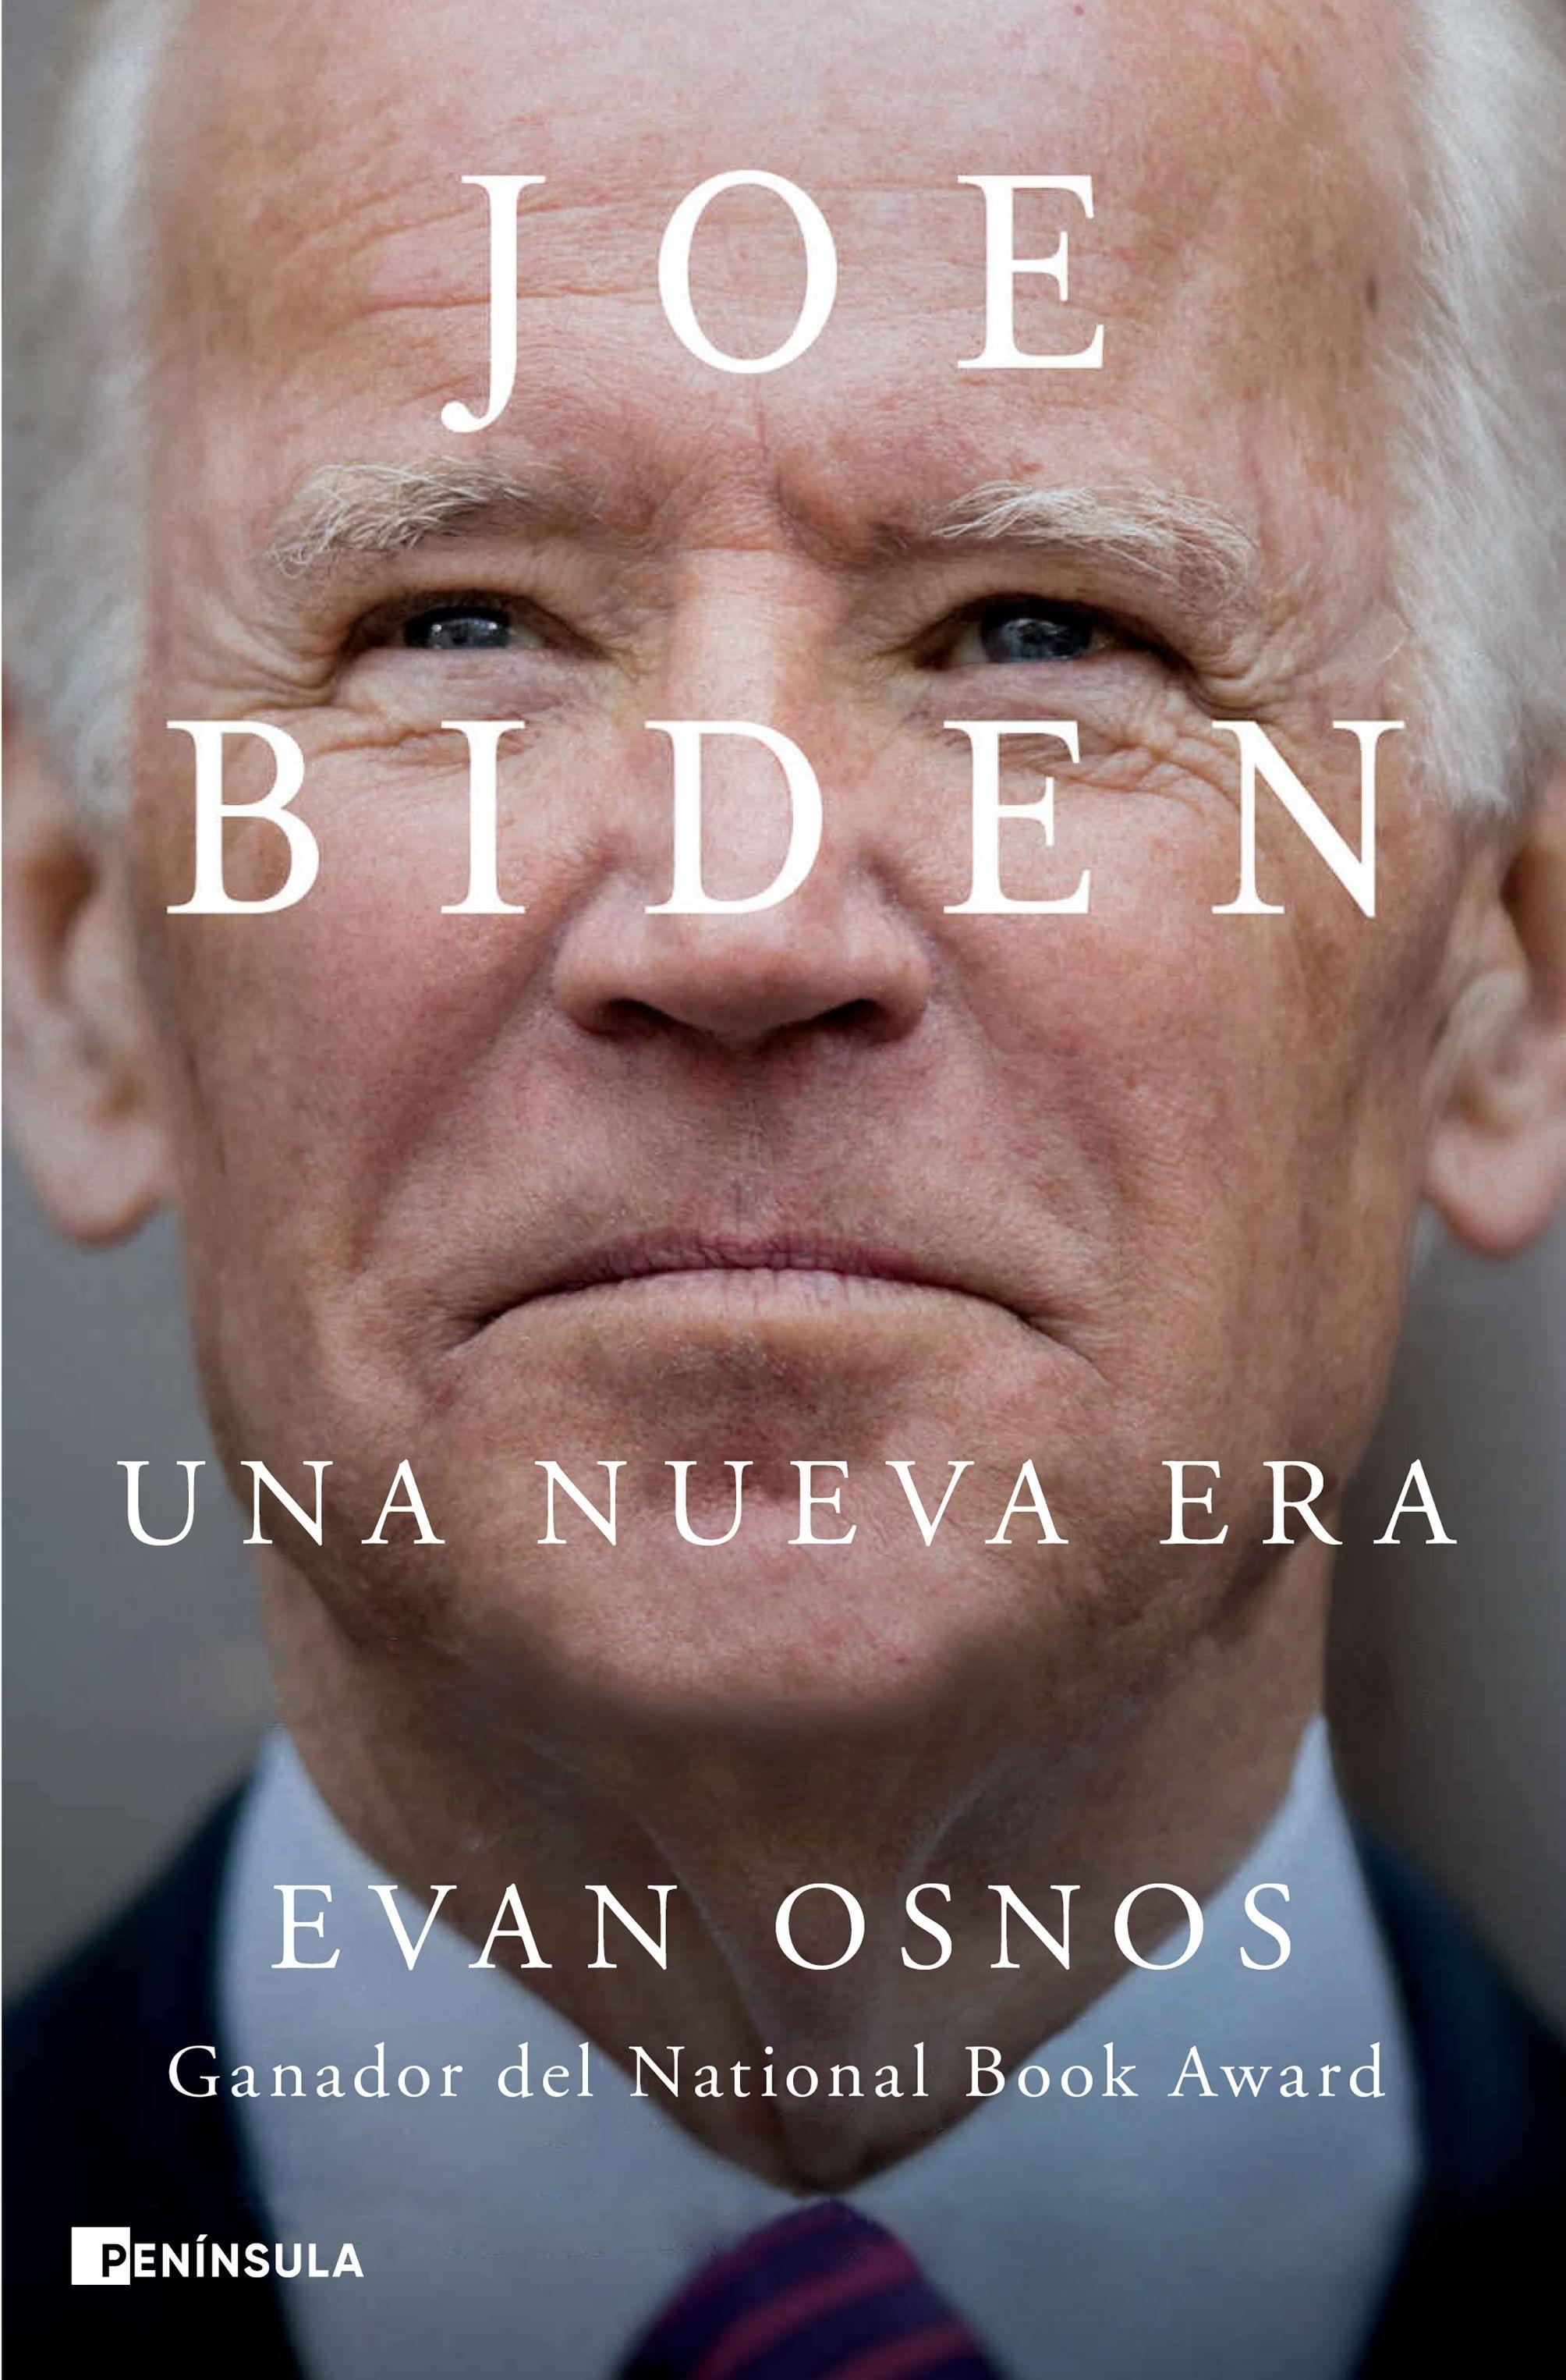 Joe Biden "Una nueva era"